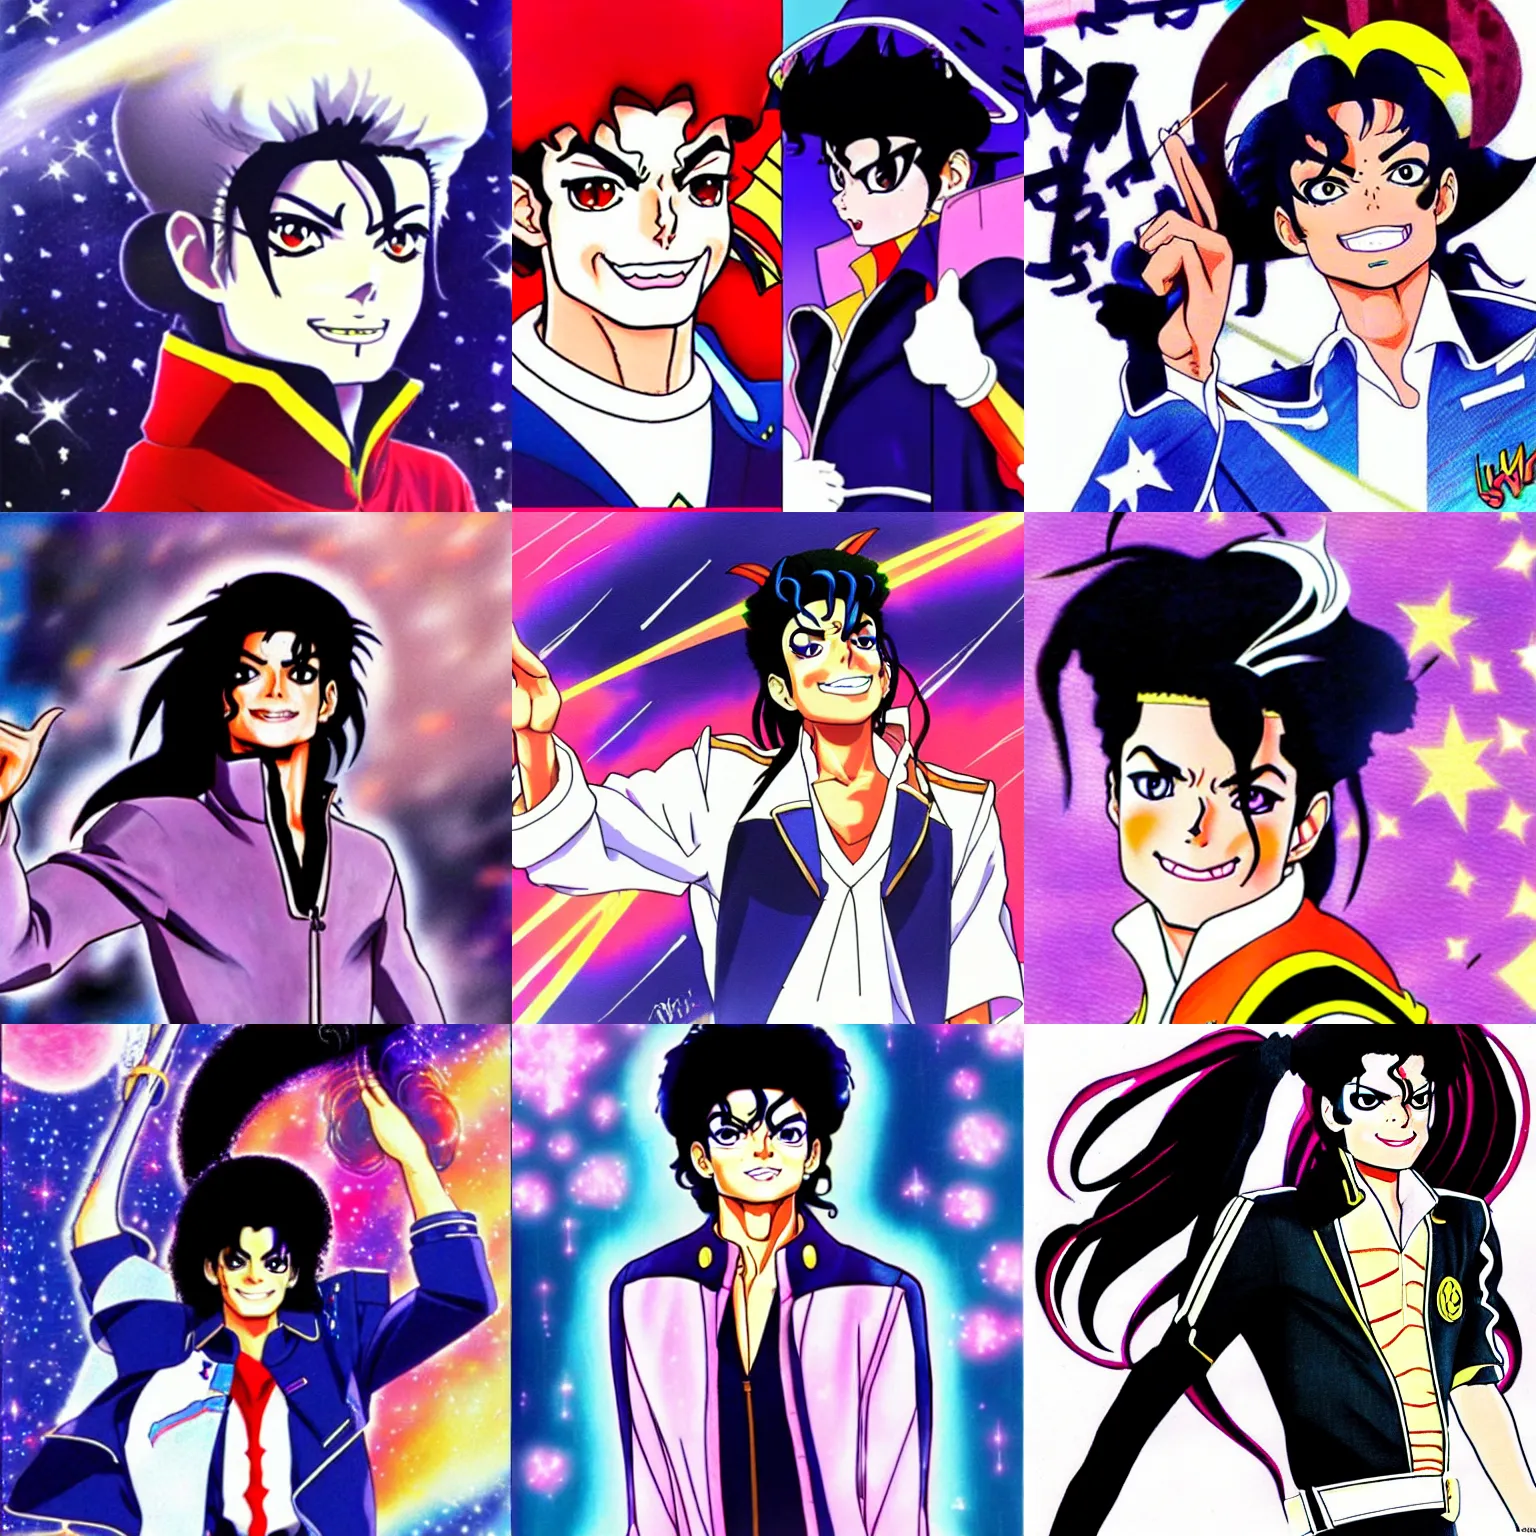 Michael Jackson anime version by bakudoki on DeviantArt